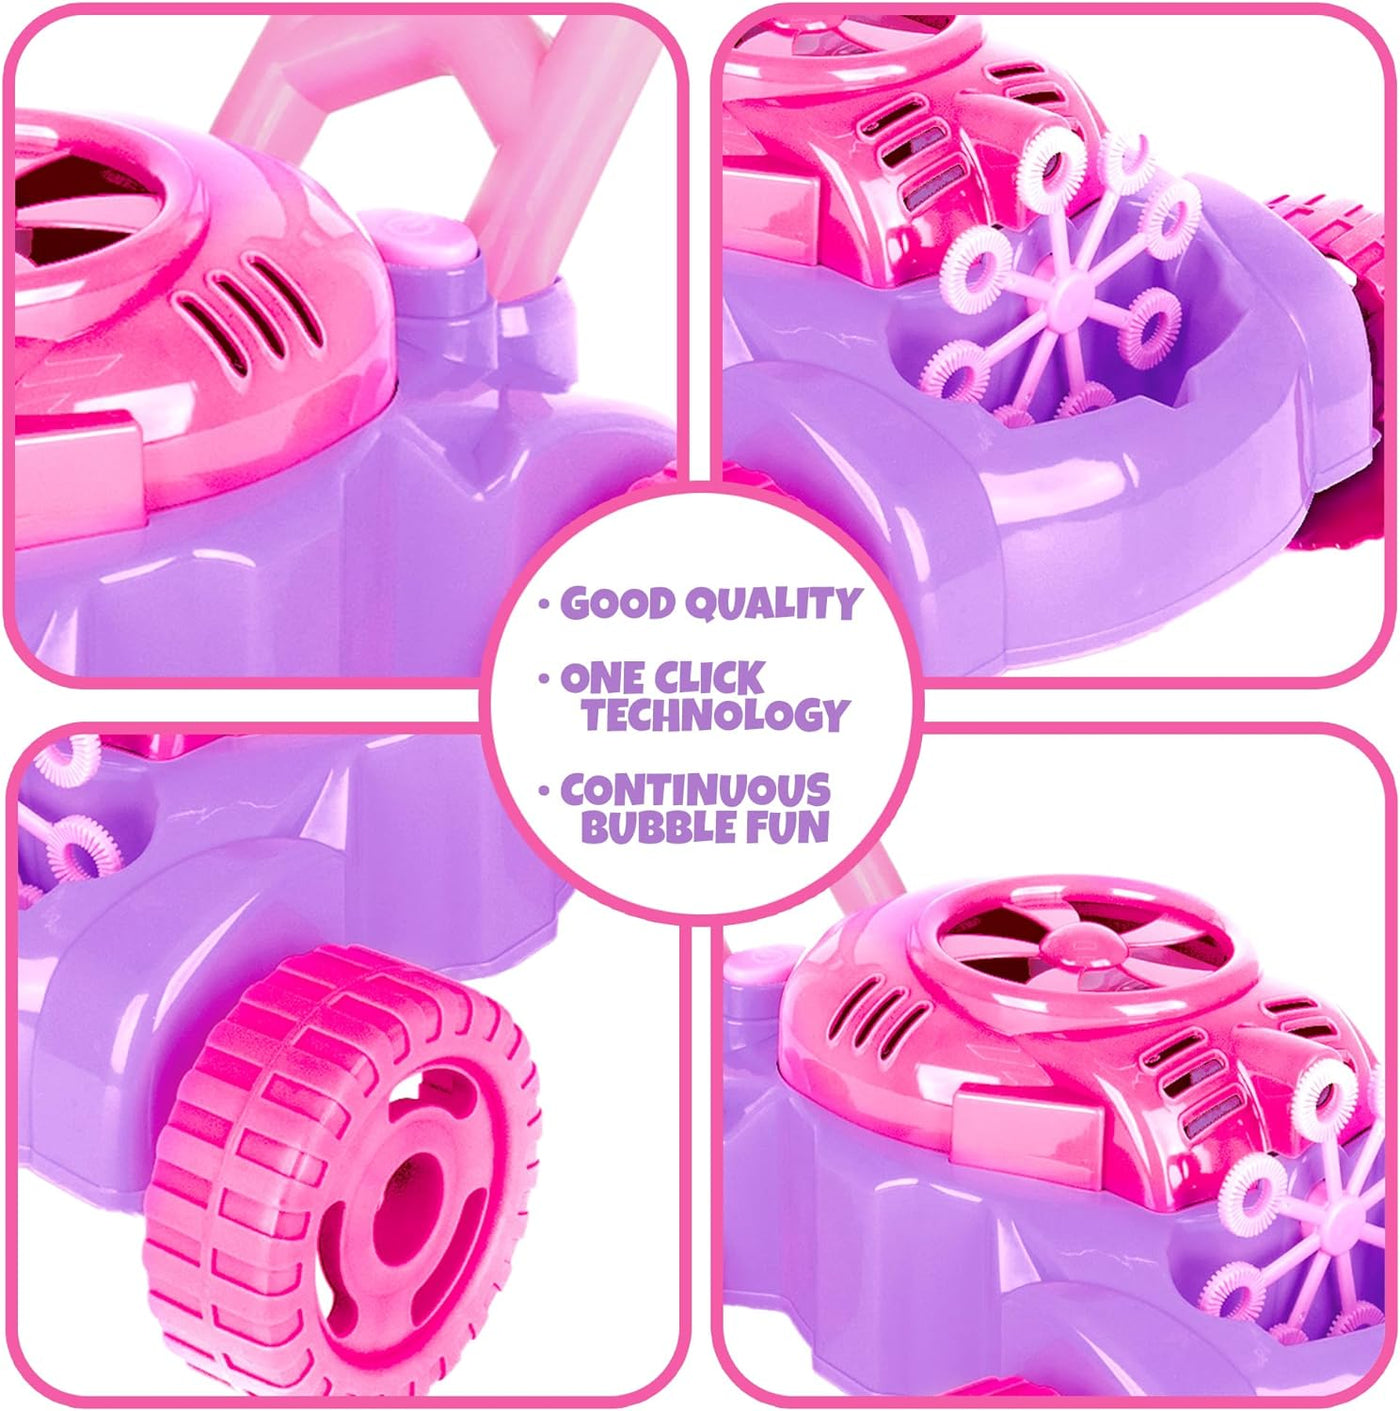  Maxx Bubbles Deluxe Bubble Lawn Mower Toy – Includes